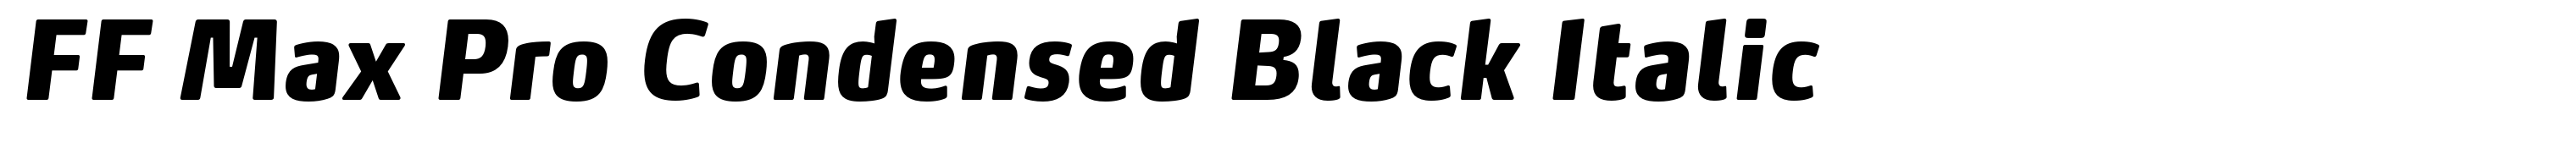 FF Max Pro Condensed Black Italic